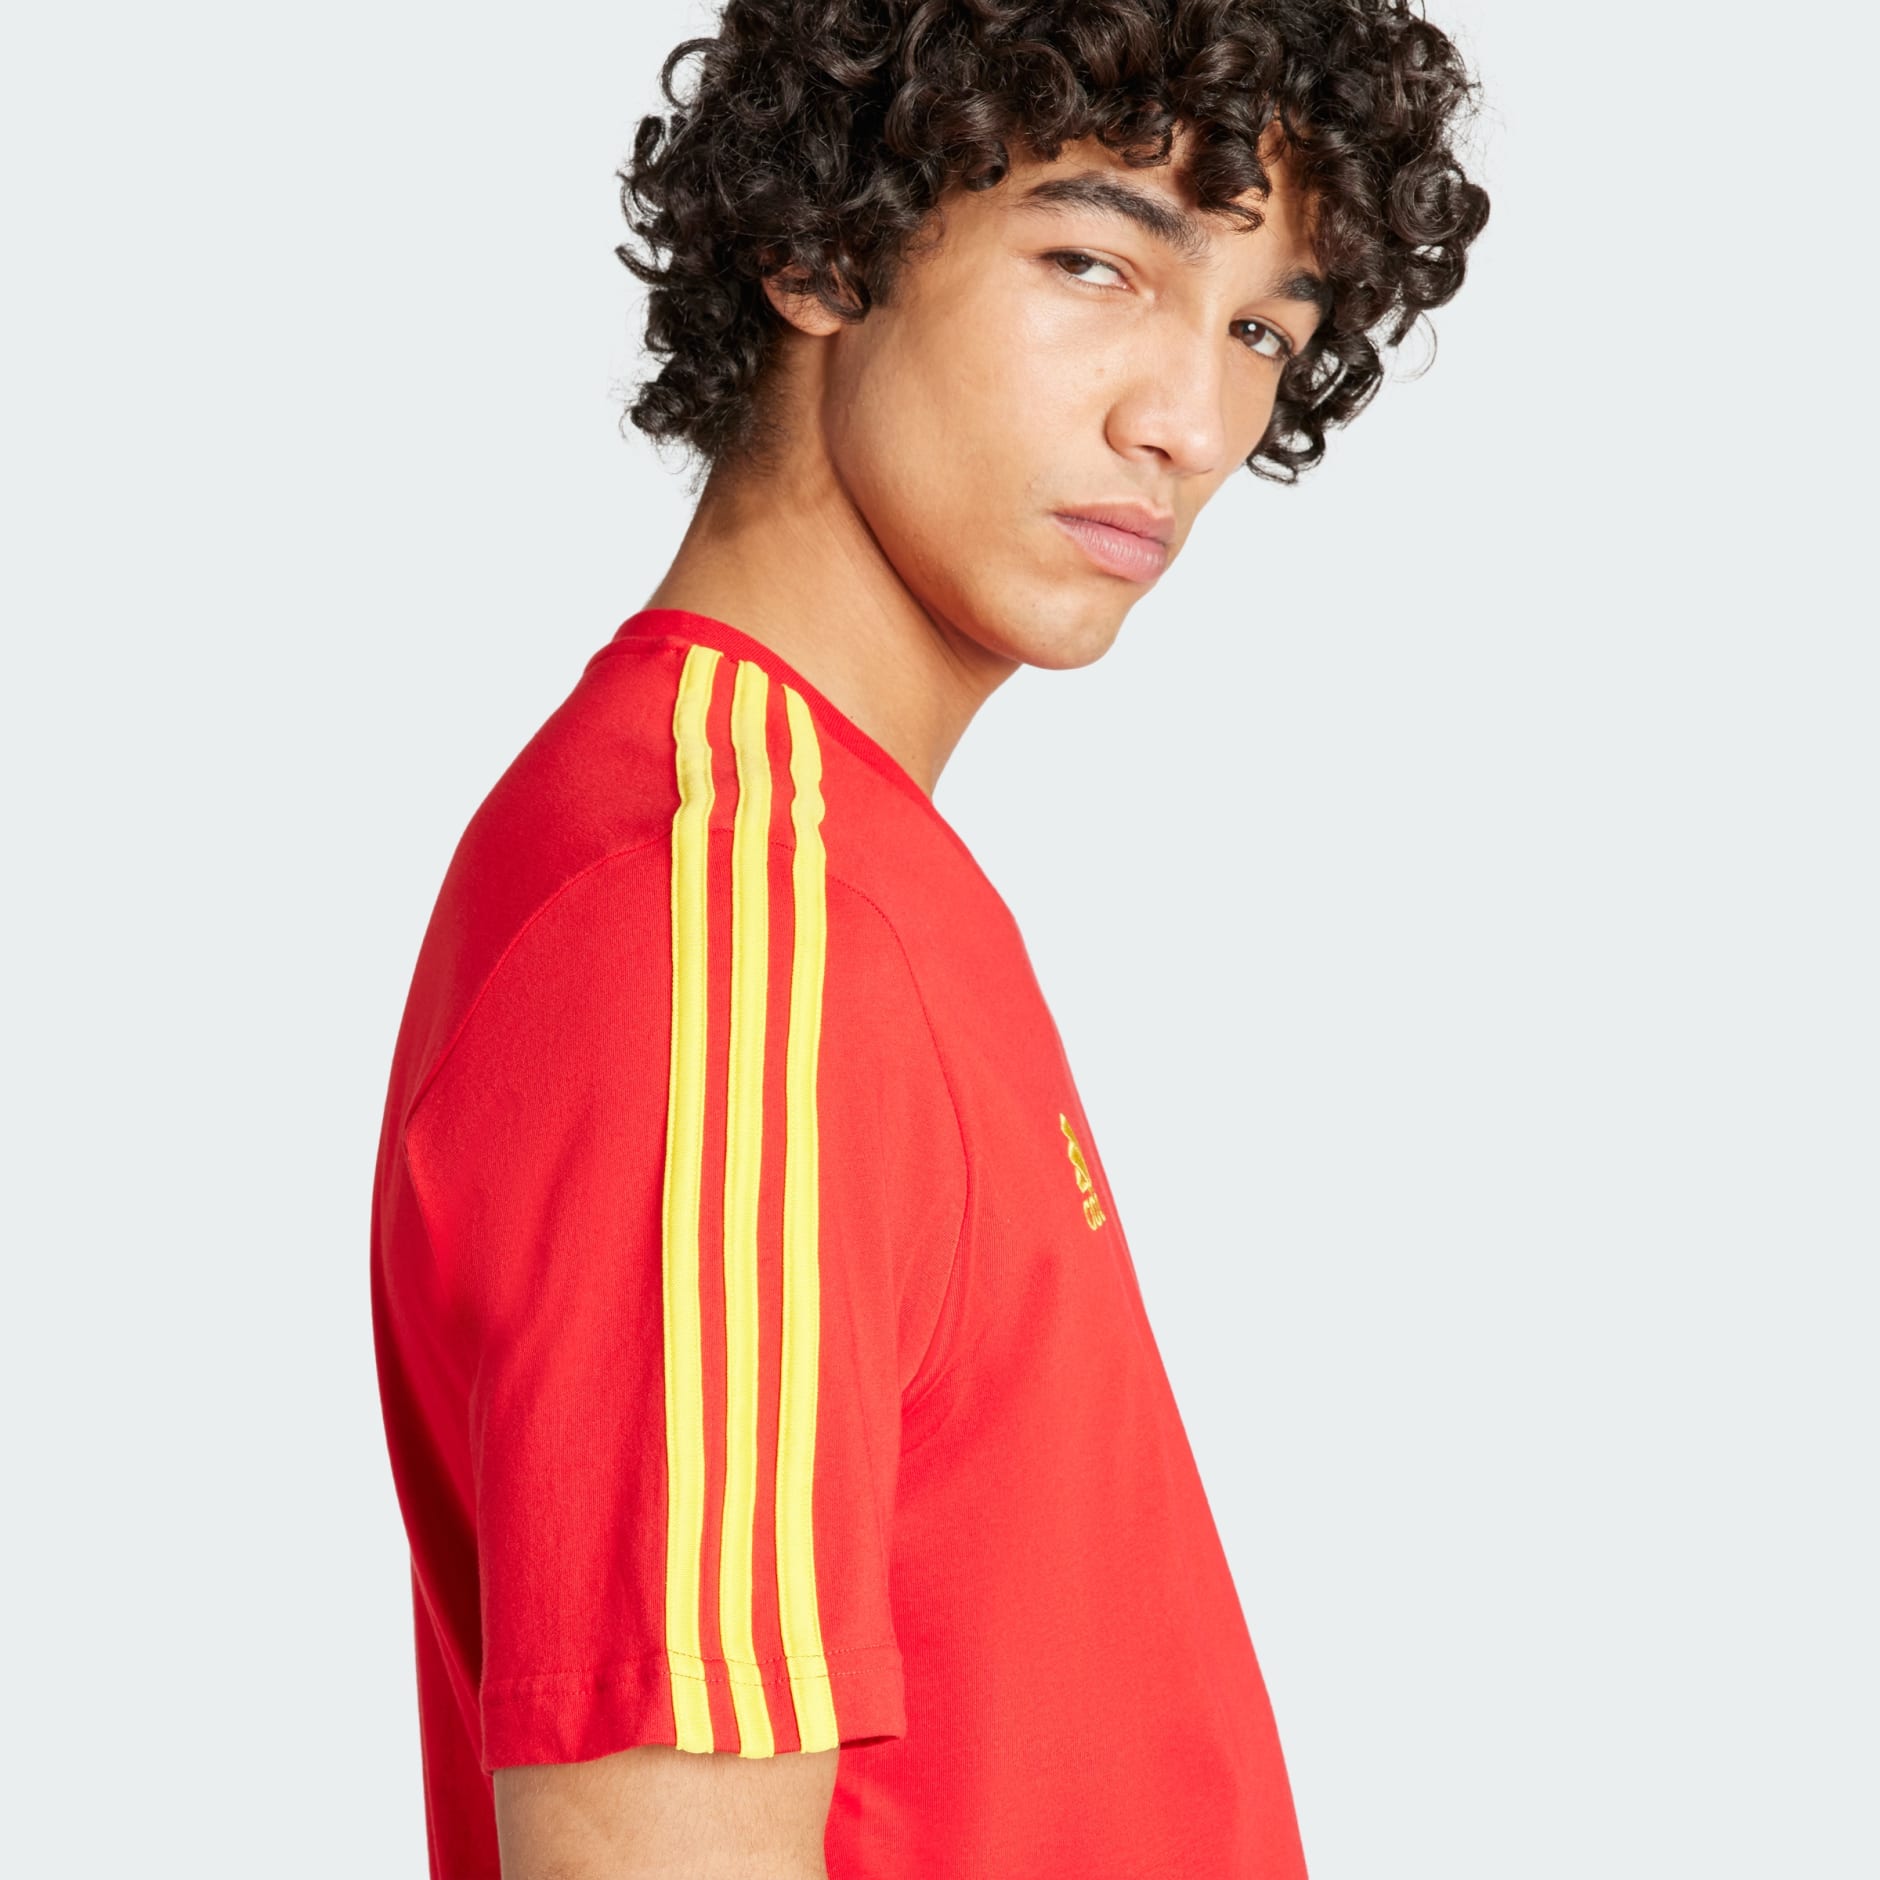 Men's Clothing - Spain DNA 3-Stripes Tee - Red | adidas Saudi Arabia